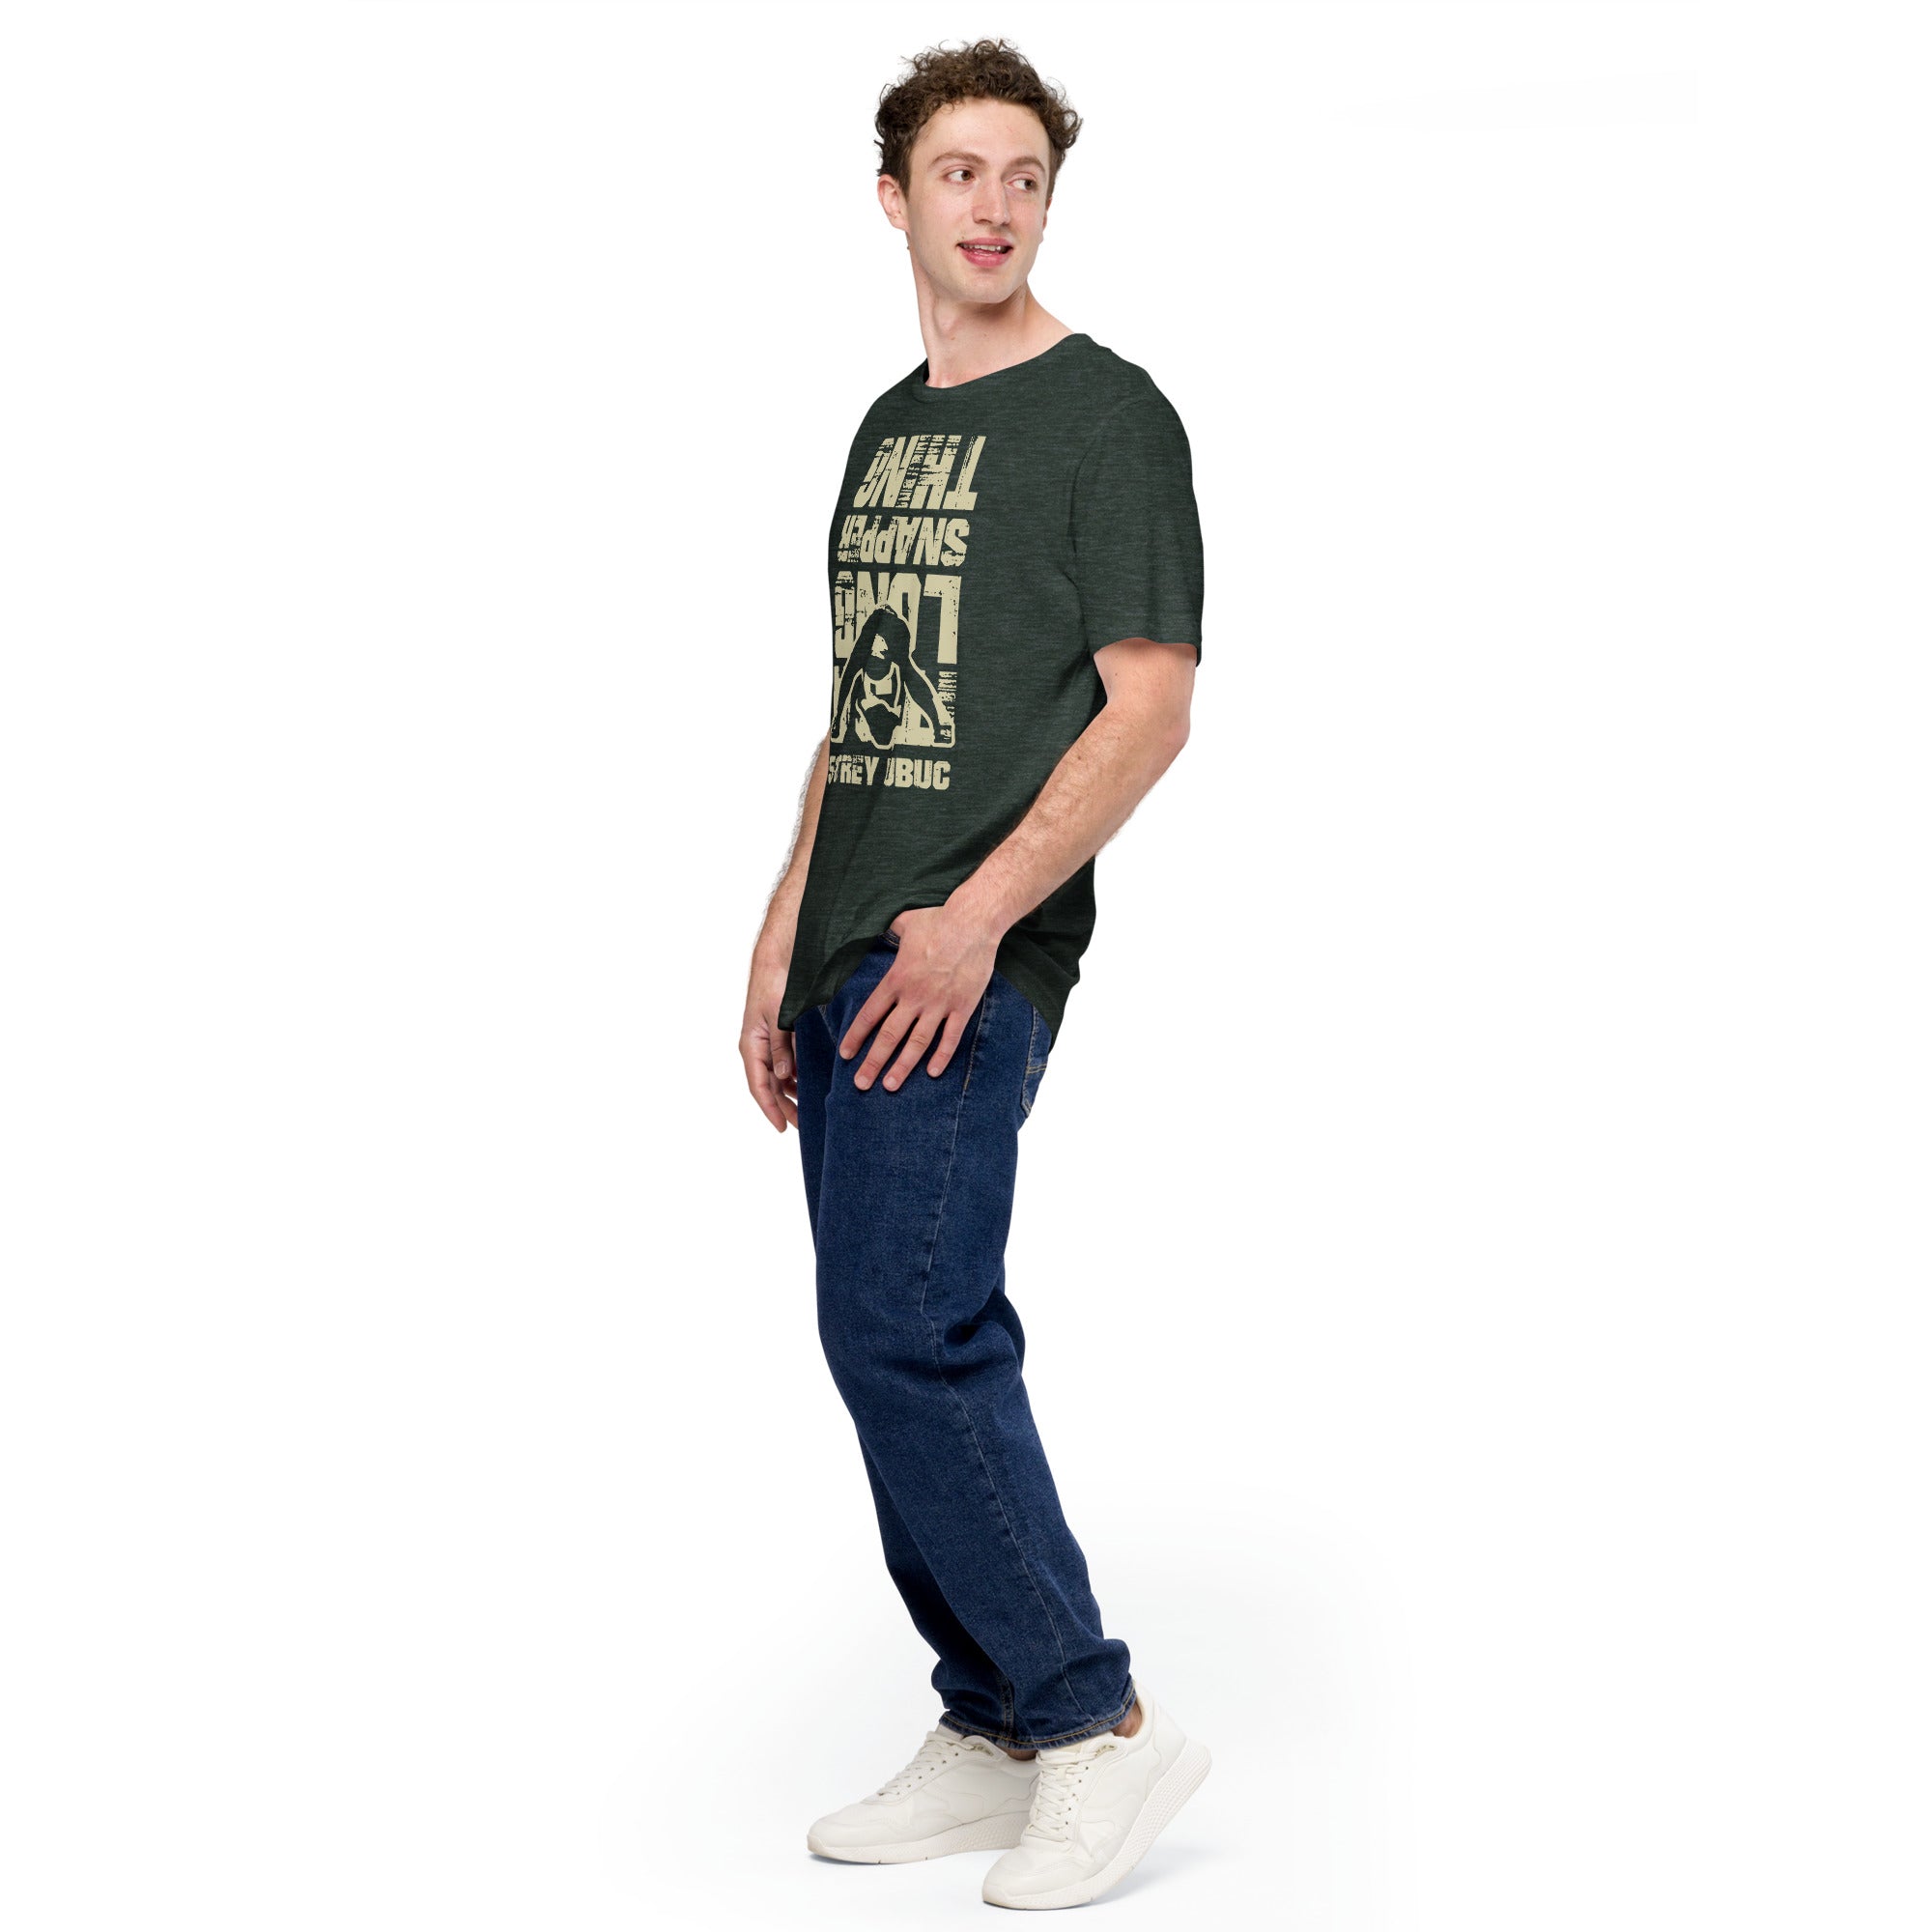 #52 - Long Snapper Thing - Trey Dubuc - Unisex t-shirt